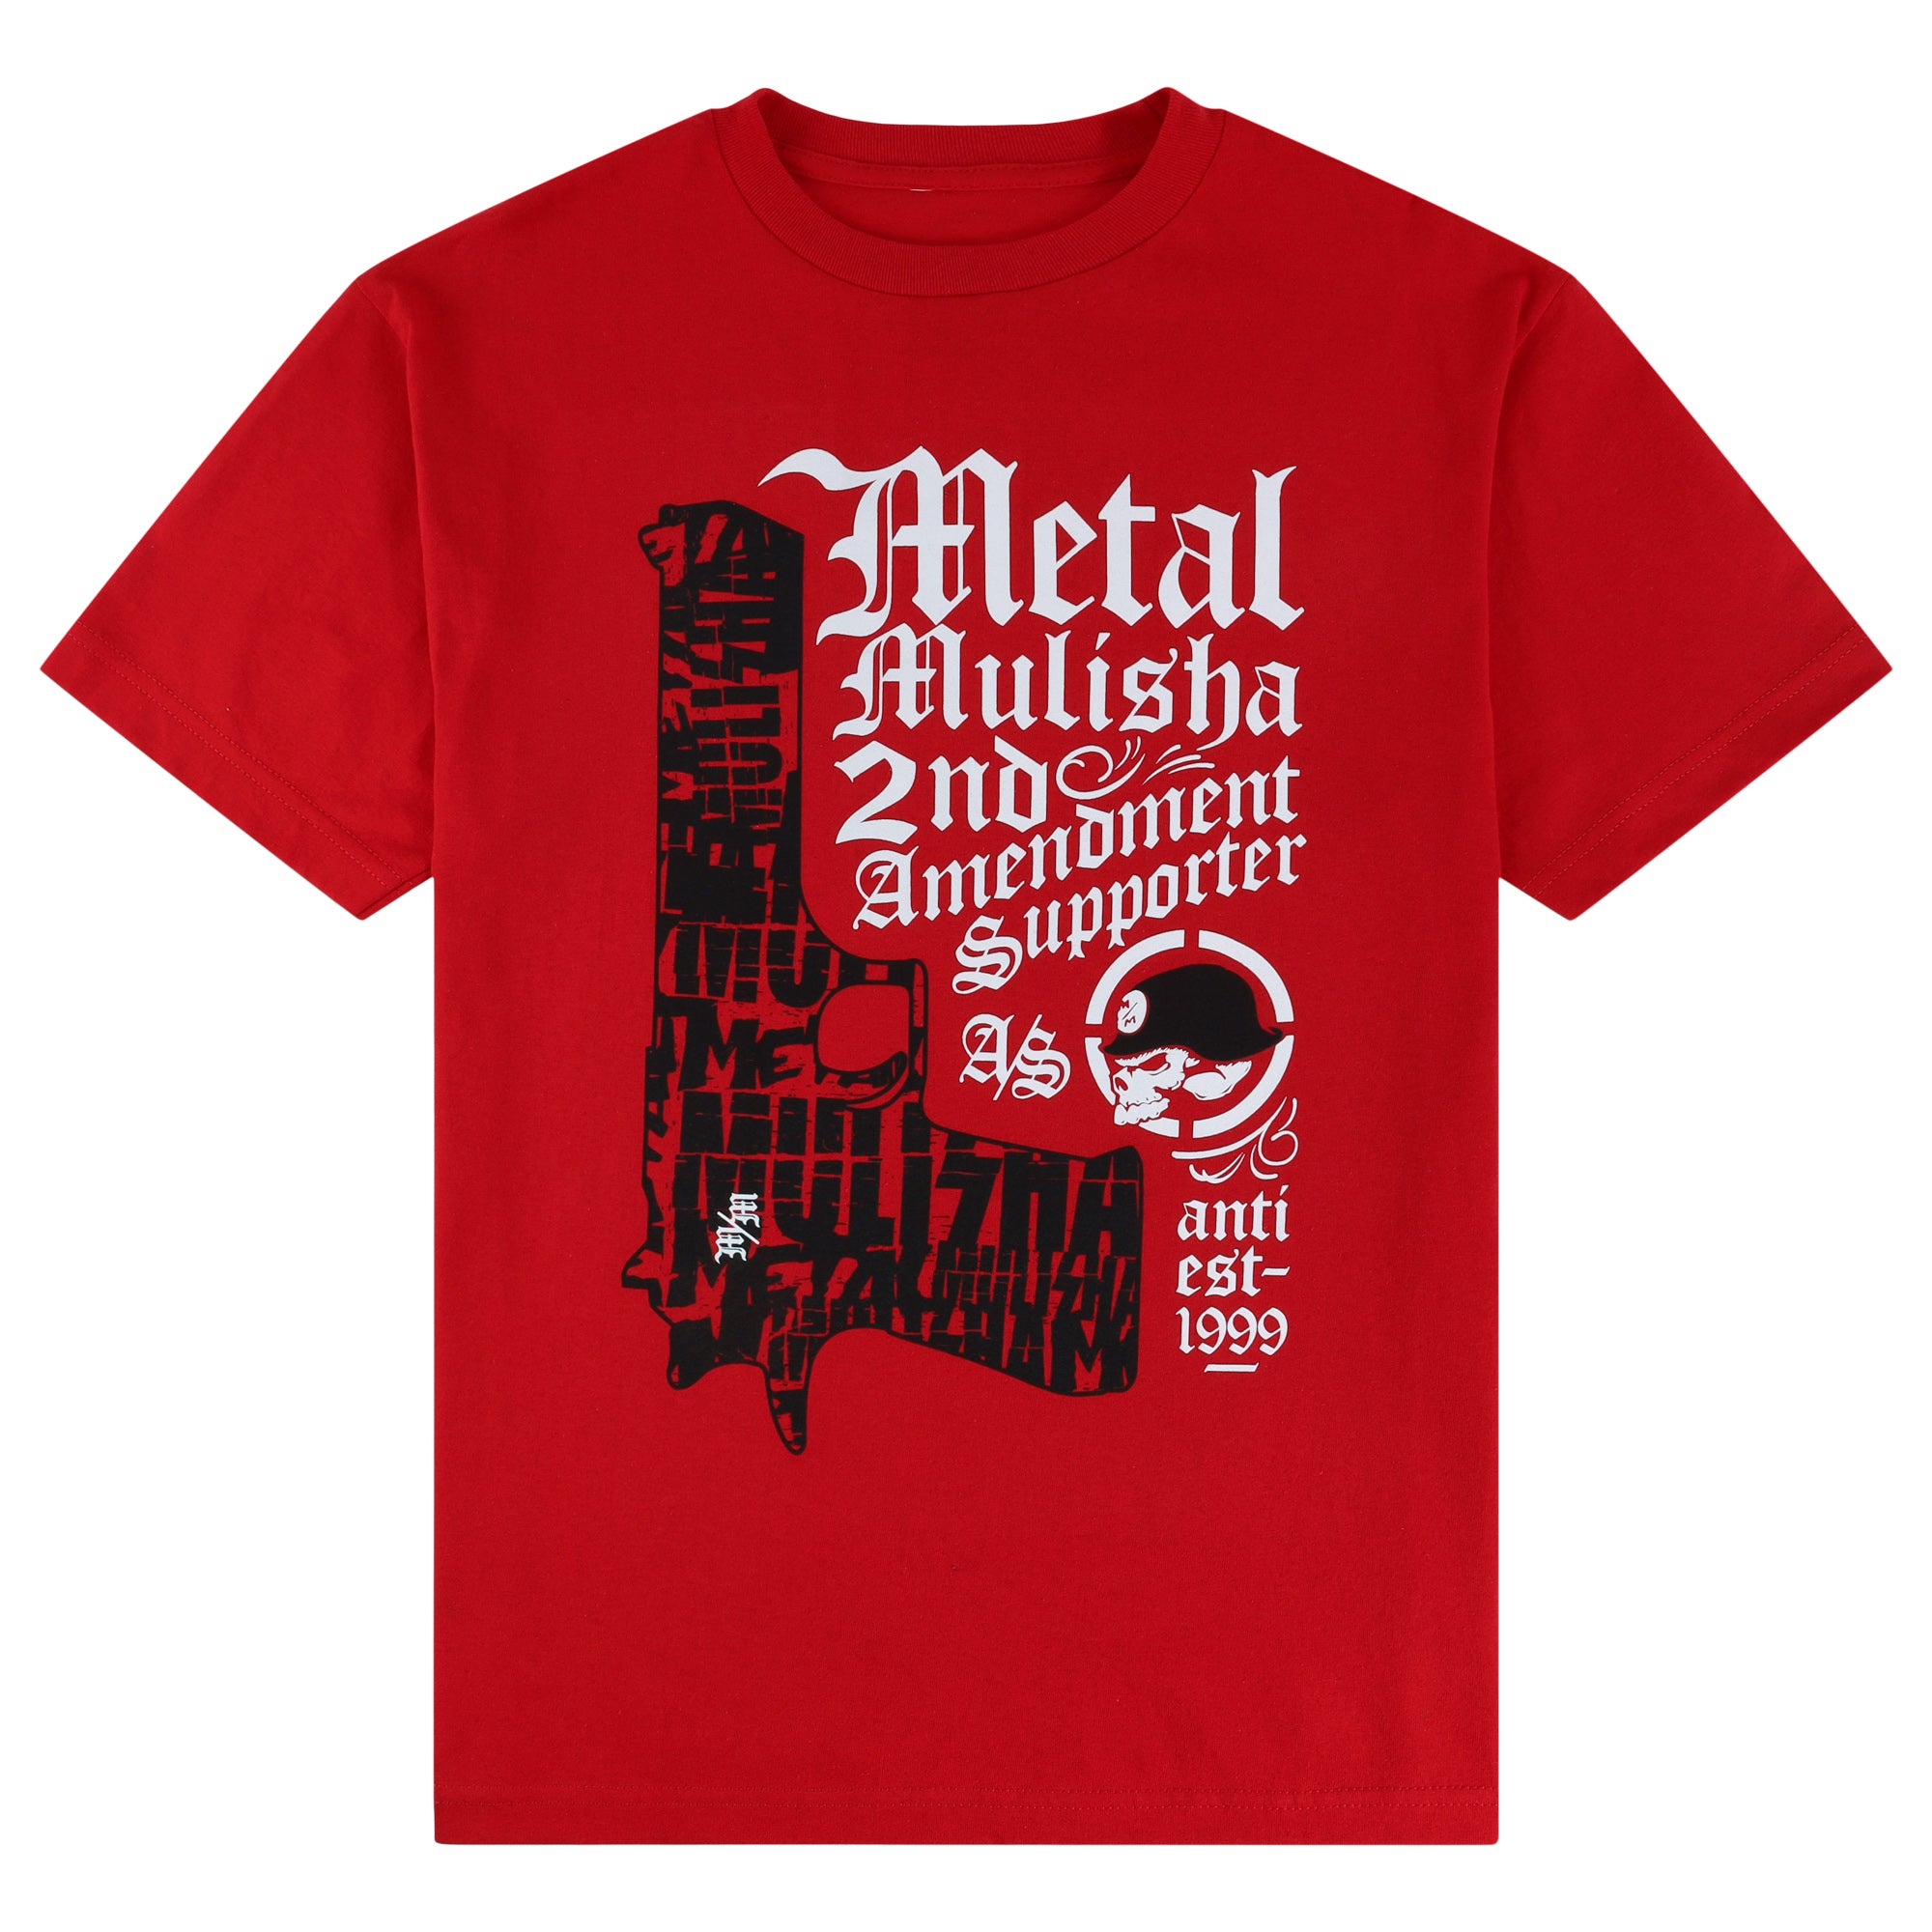 Metal Mulisha 2nd Amendment Supporter Tee Red